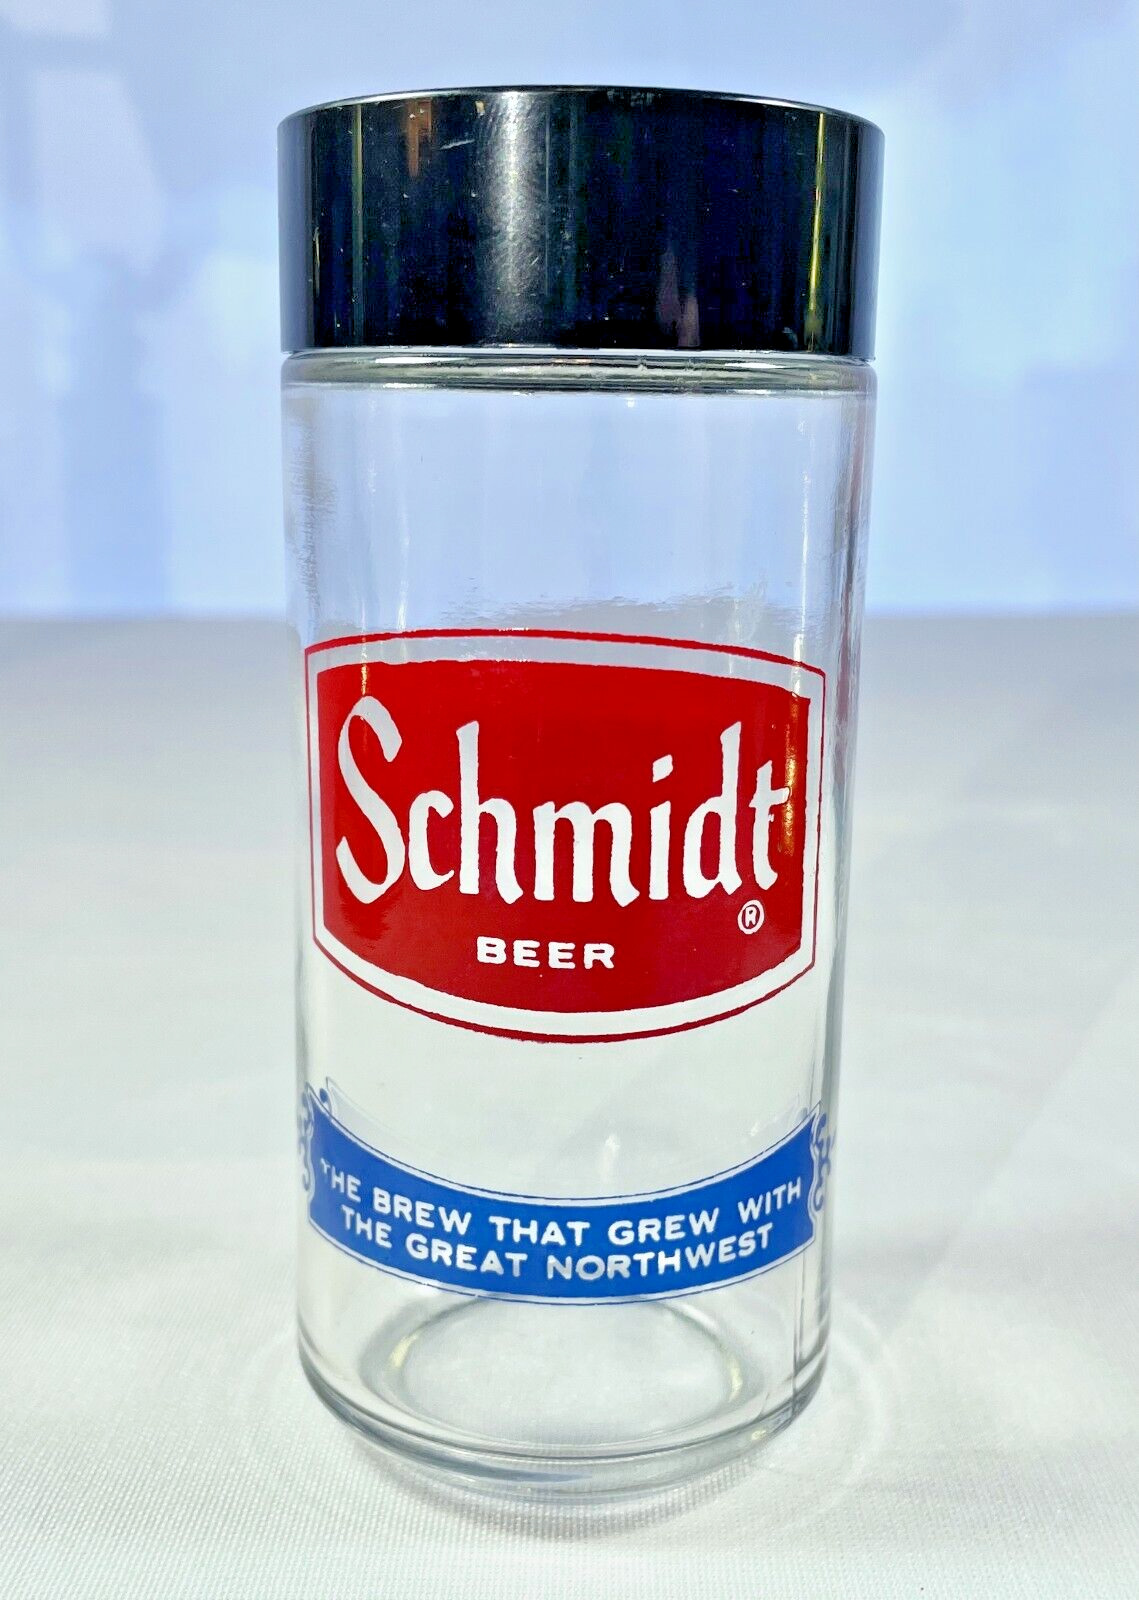 Vtg SCHMIDT BEER GLASS SALT SHAKER ~ Brew That Grew w/ The Great Northwest VGC